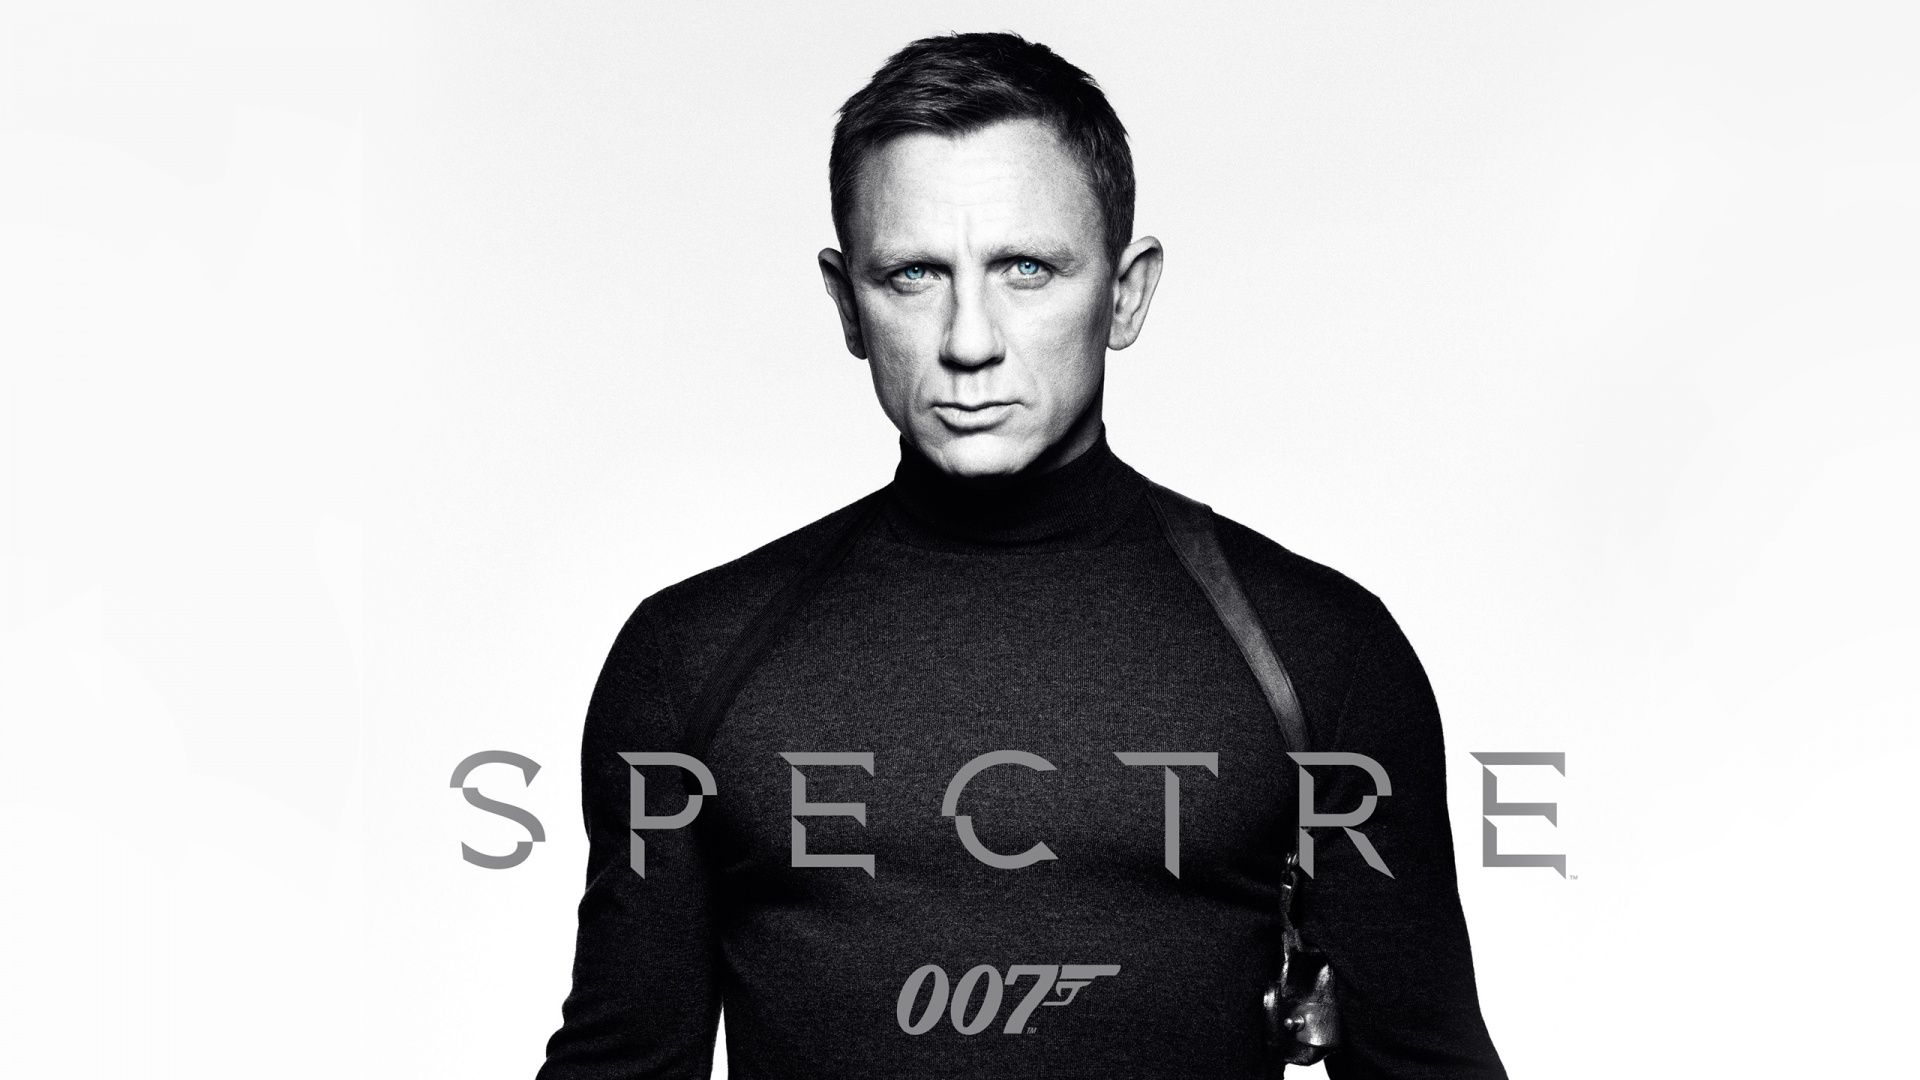 007 desktop image